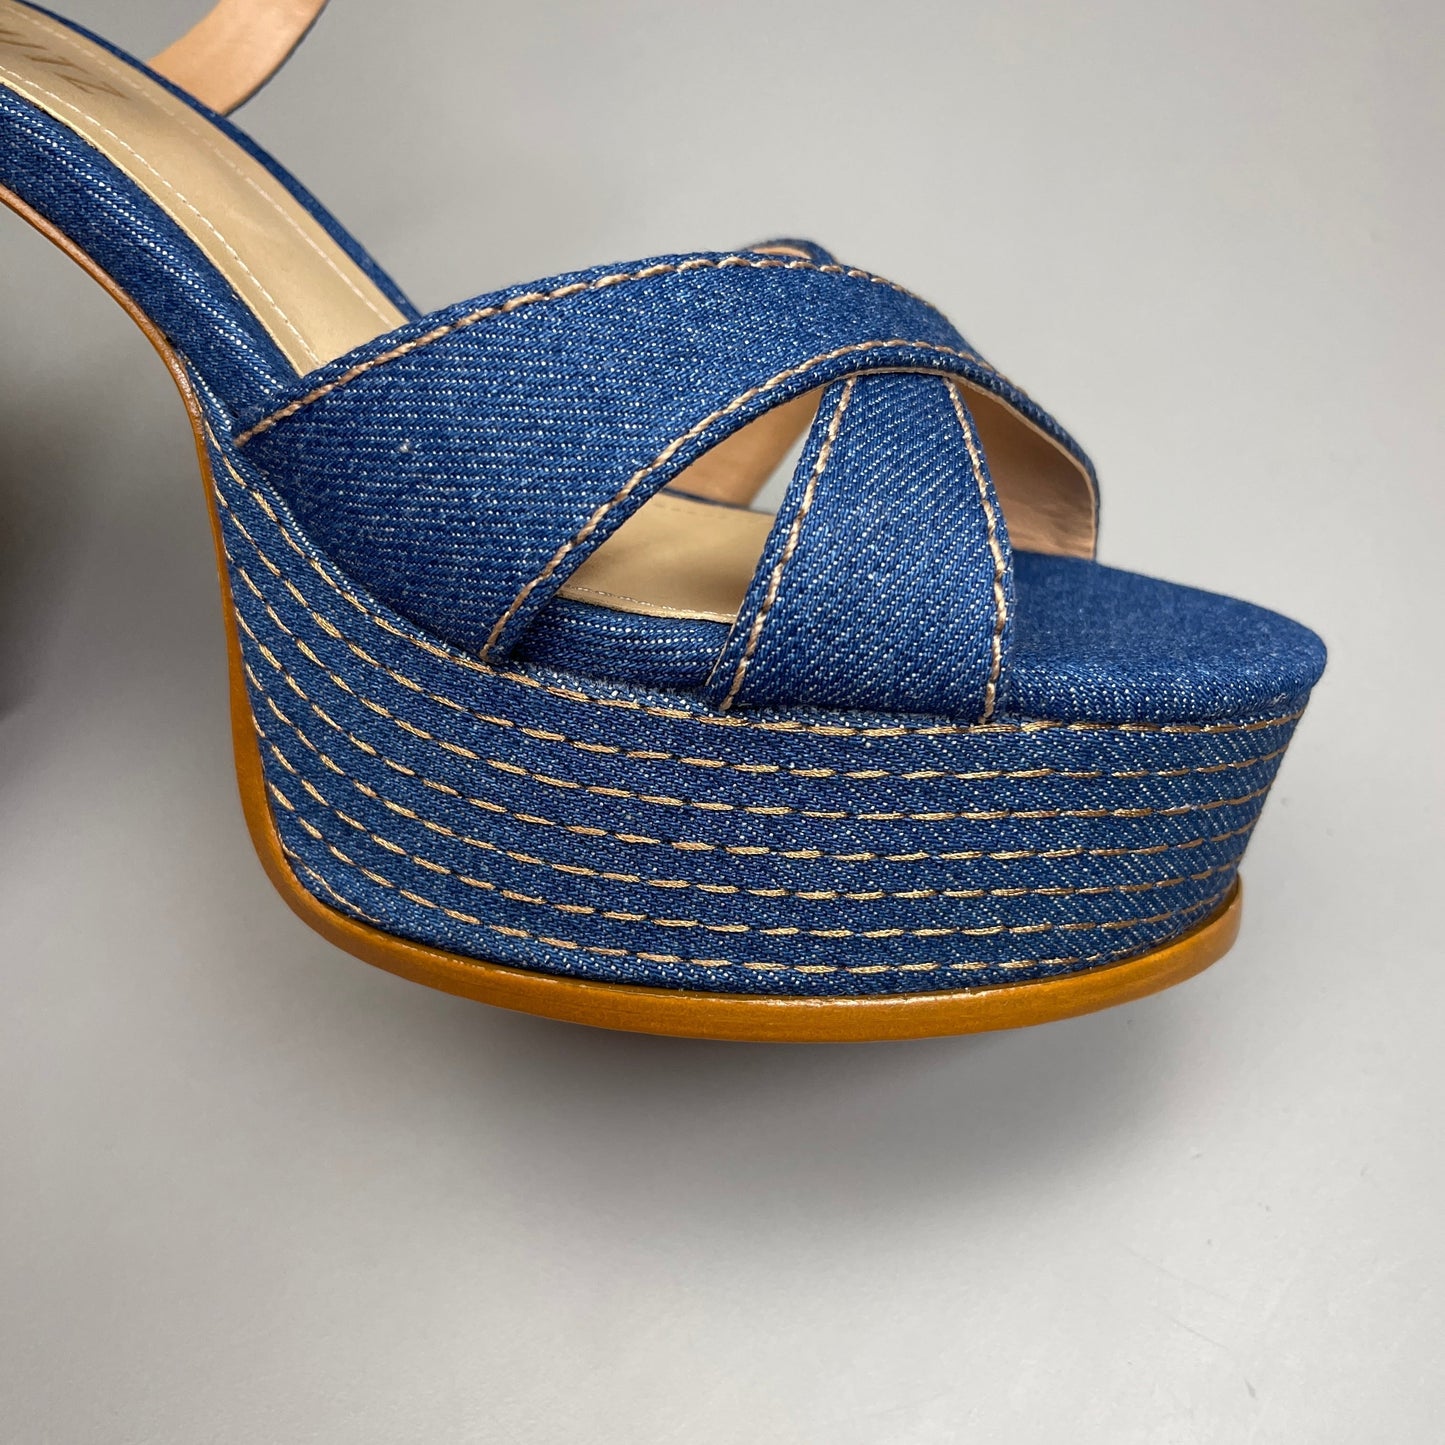 SCHUTZ Keefa Casual Denim Women's 4" Heeled Sandal Platform Blue Sz 9.5B (New)